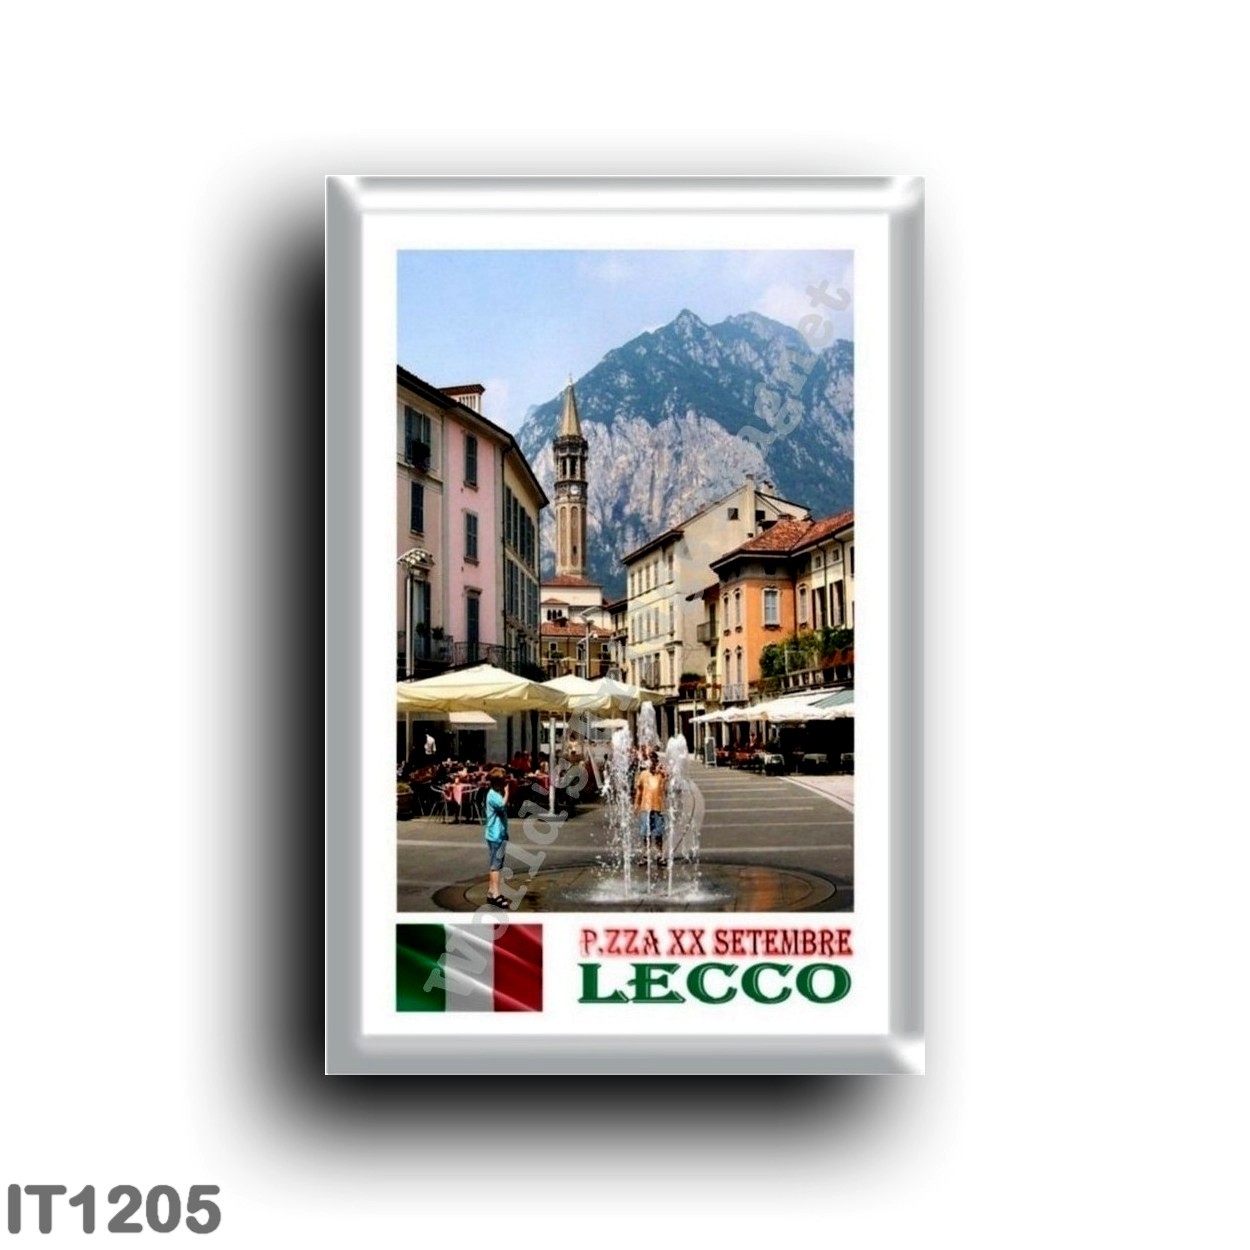 Lake Como Houses Italy - Souvenir Fridge Magnet